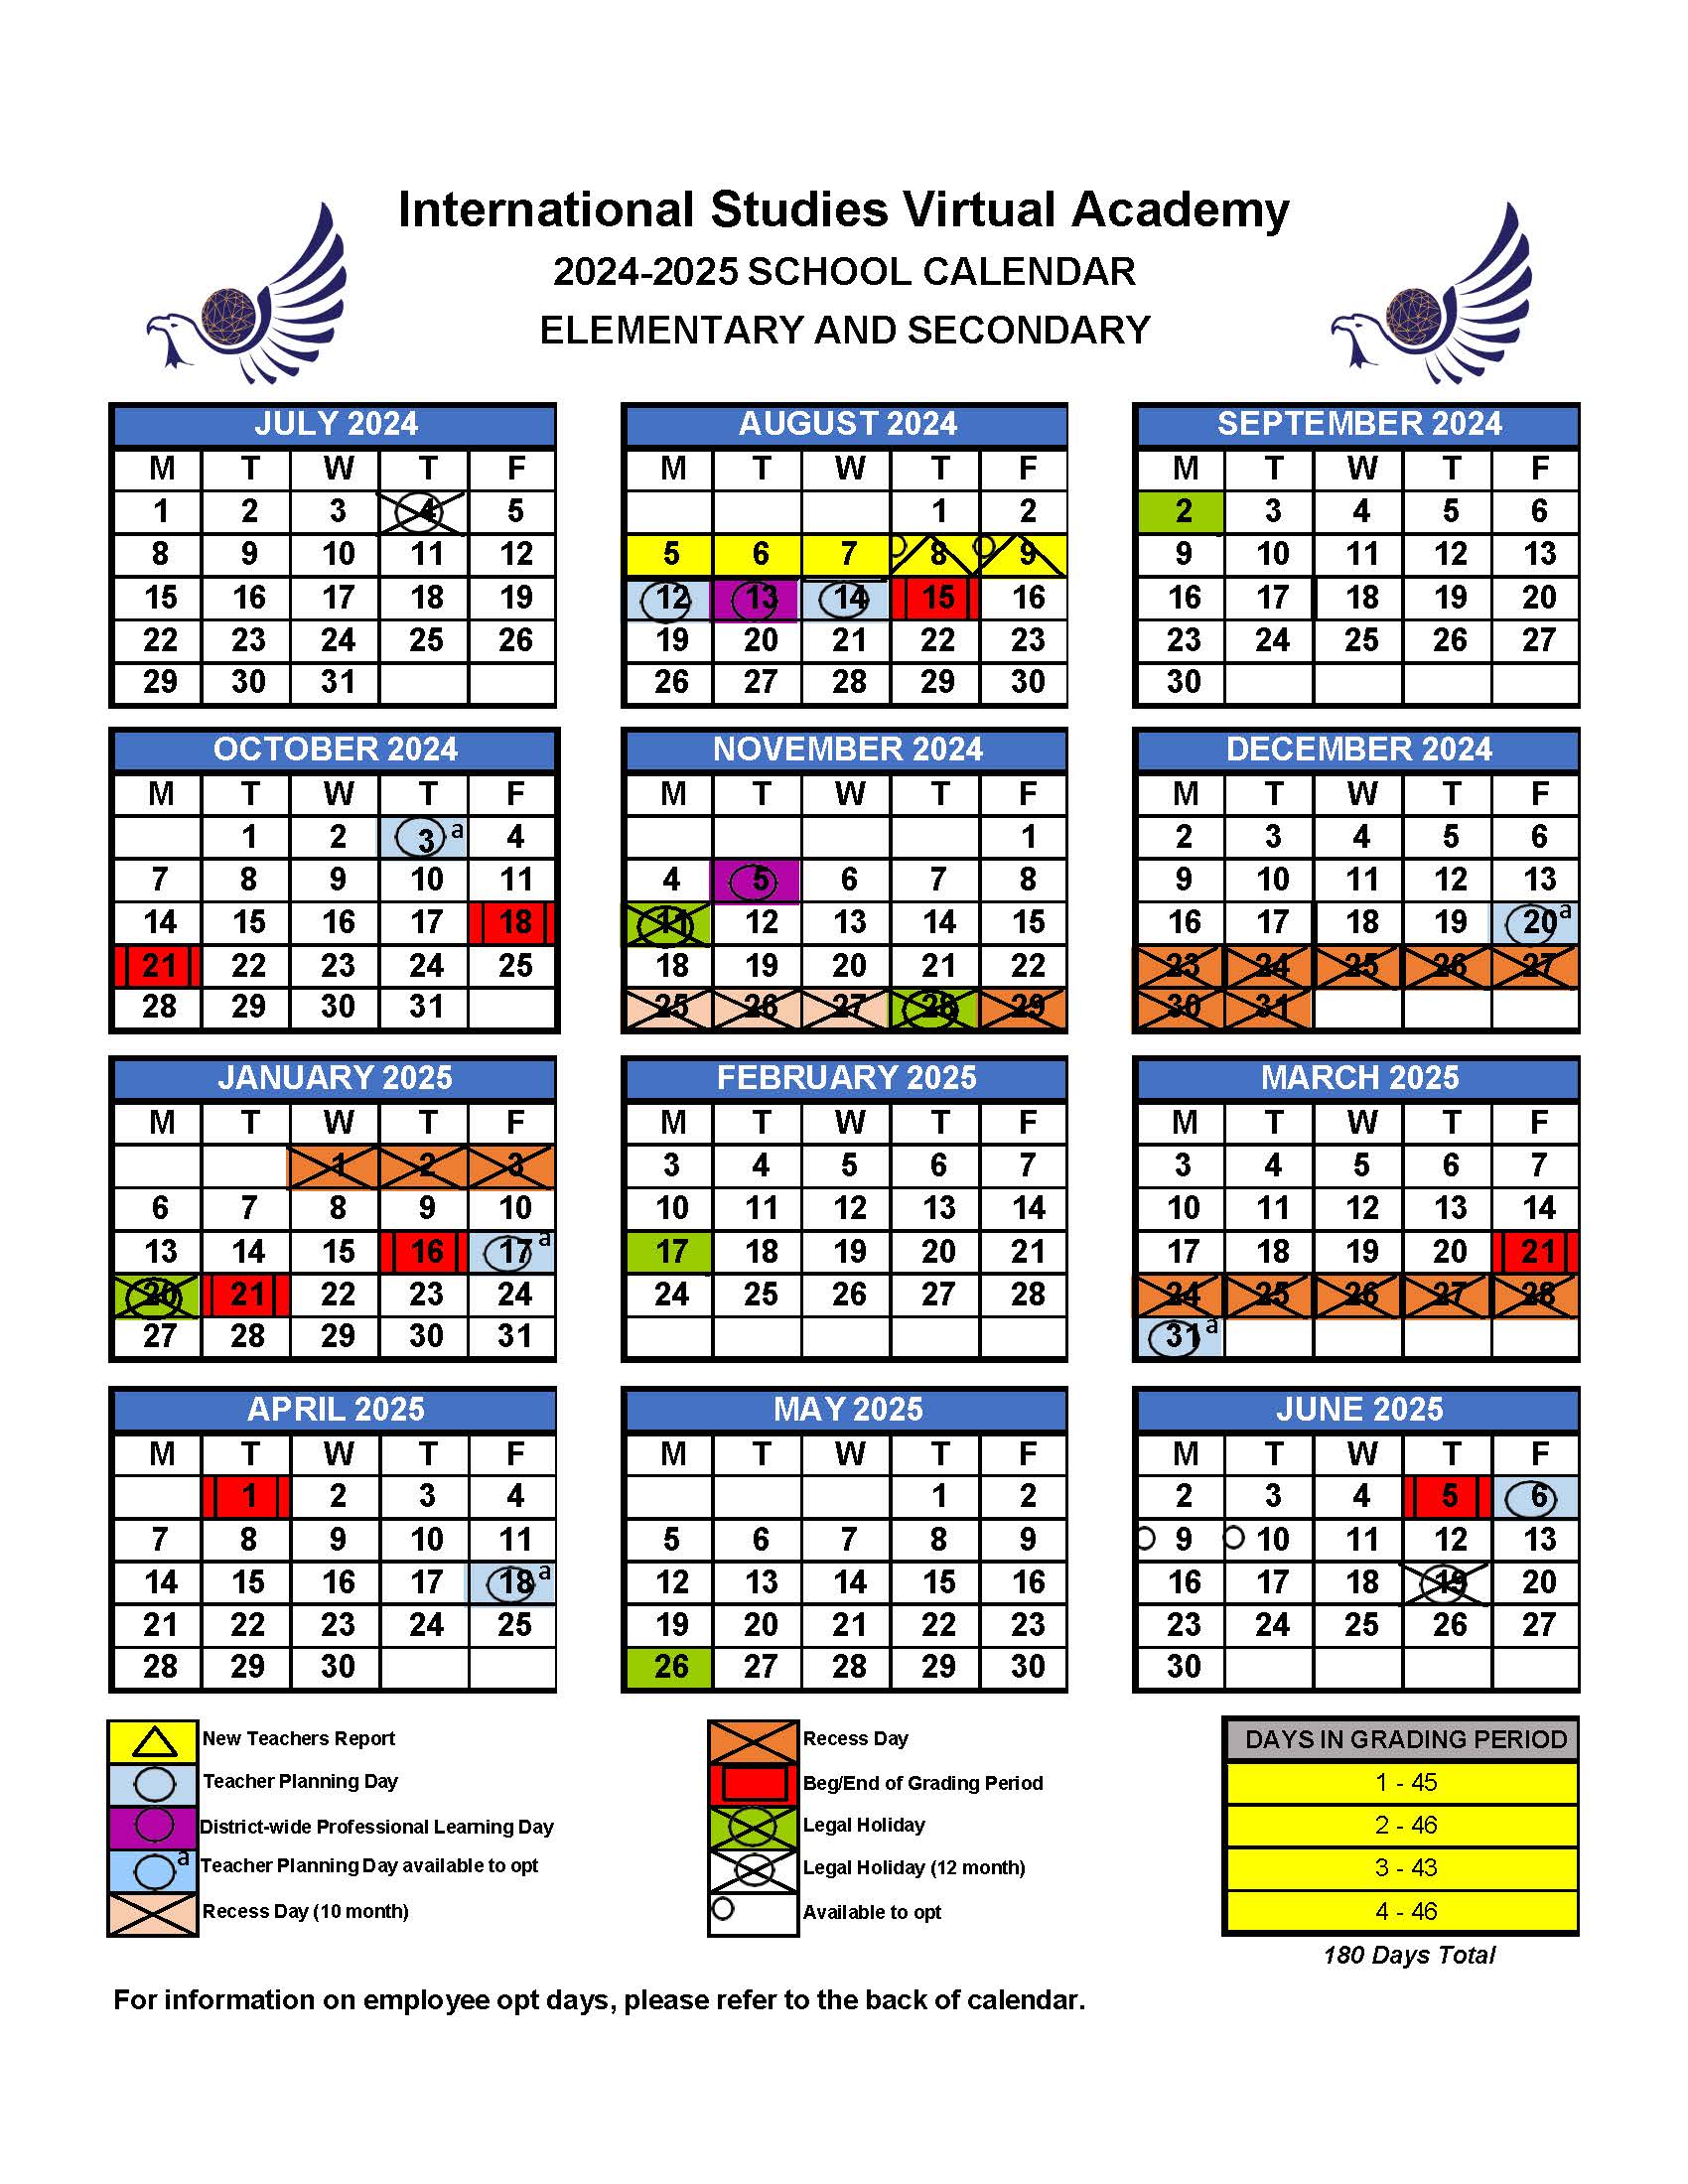 ISV 2024-2025 School Calendar